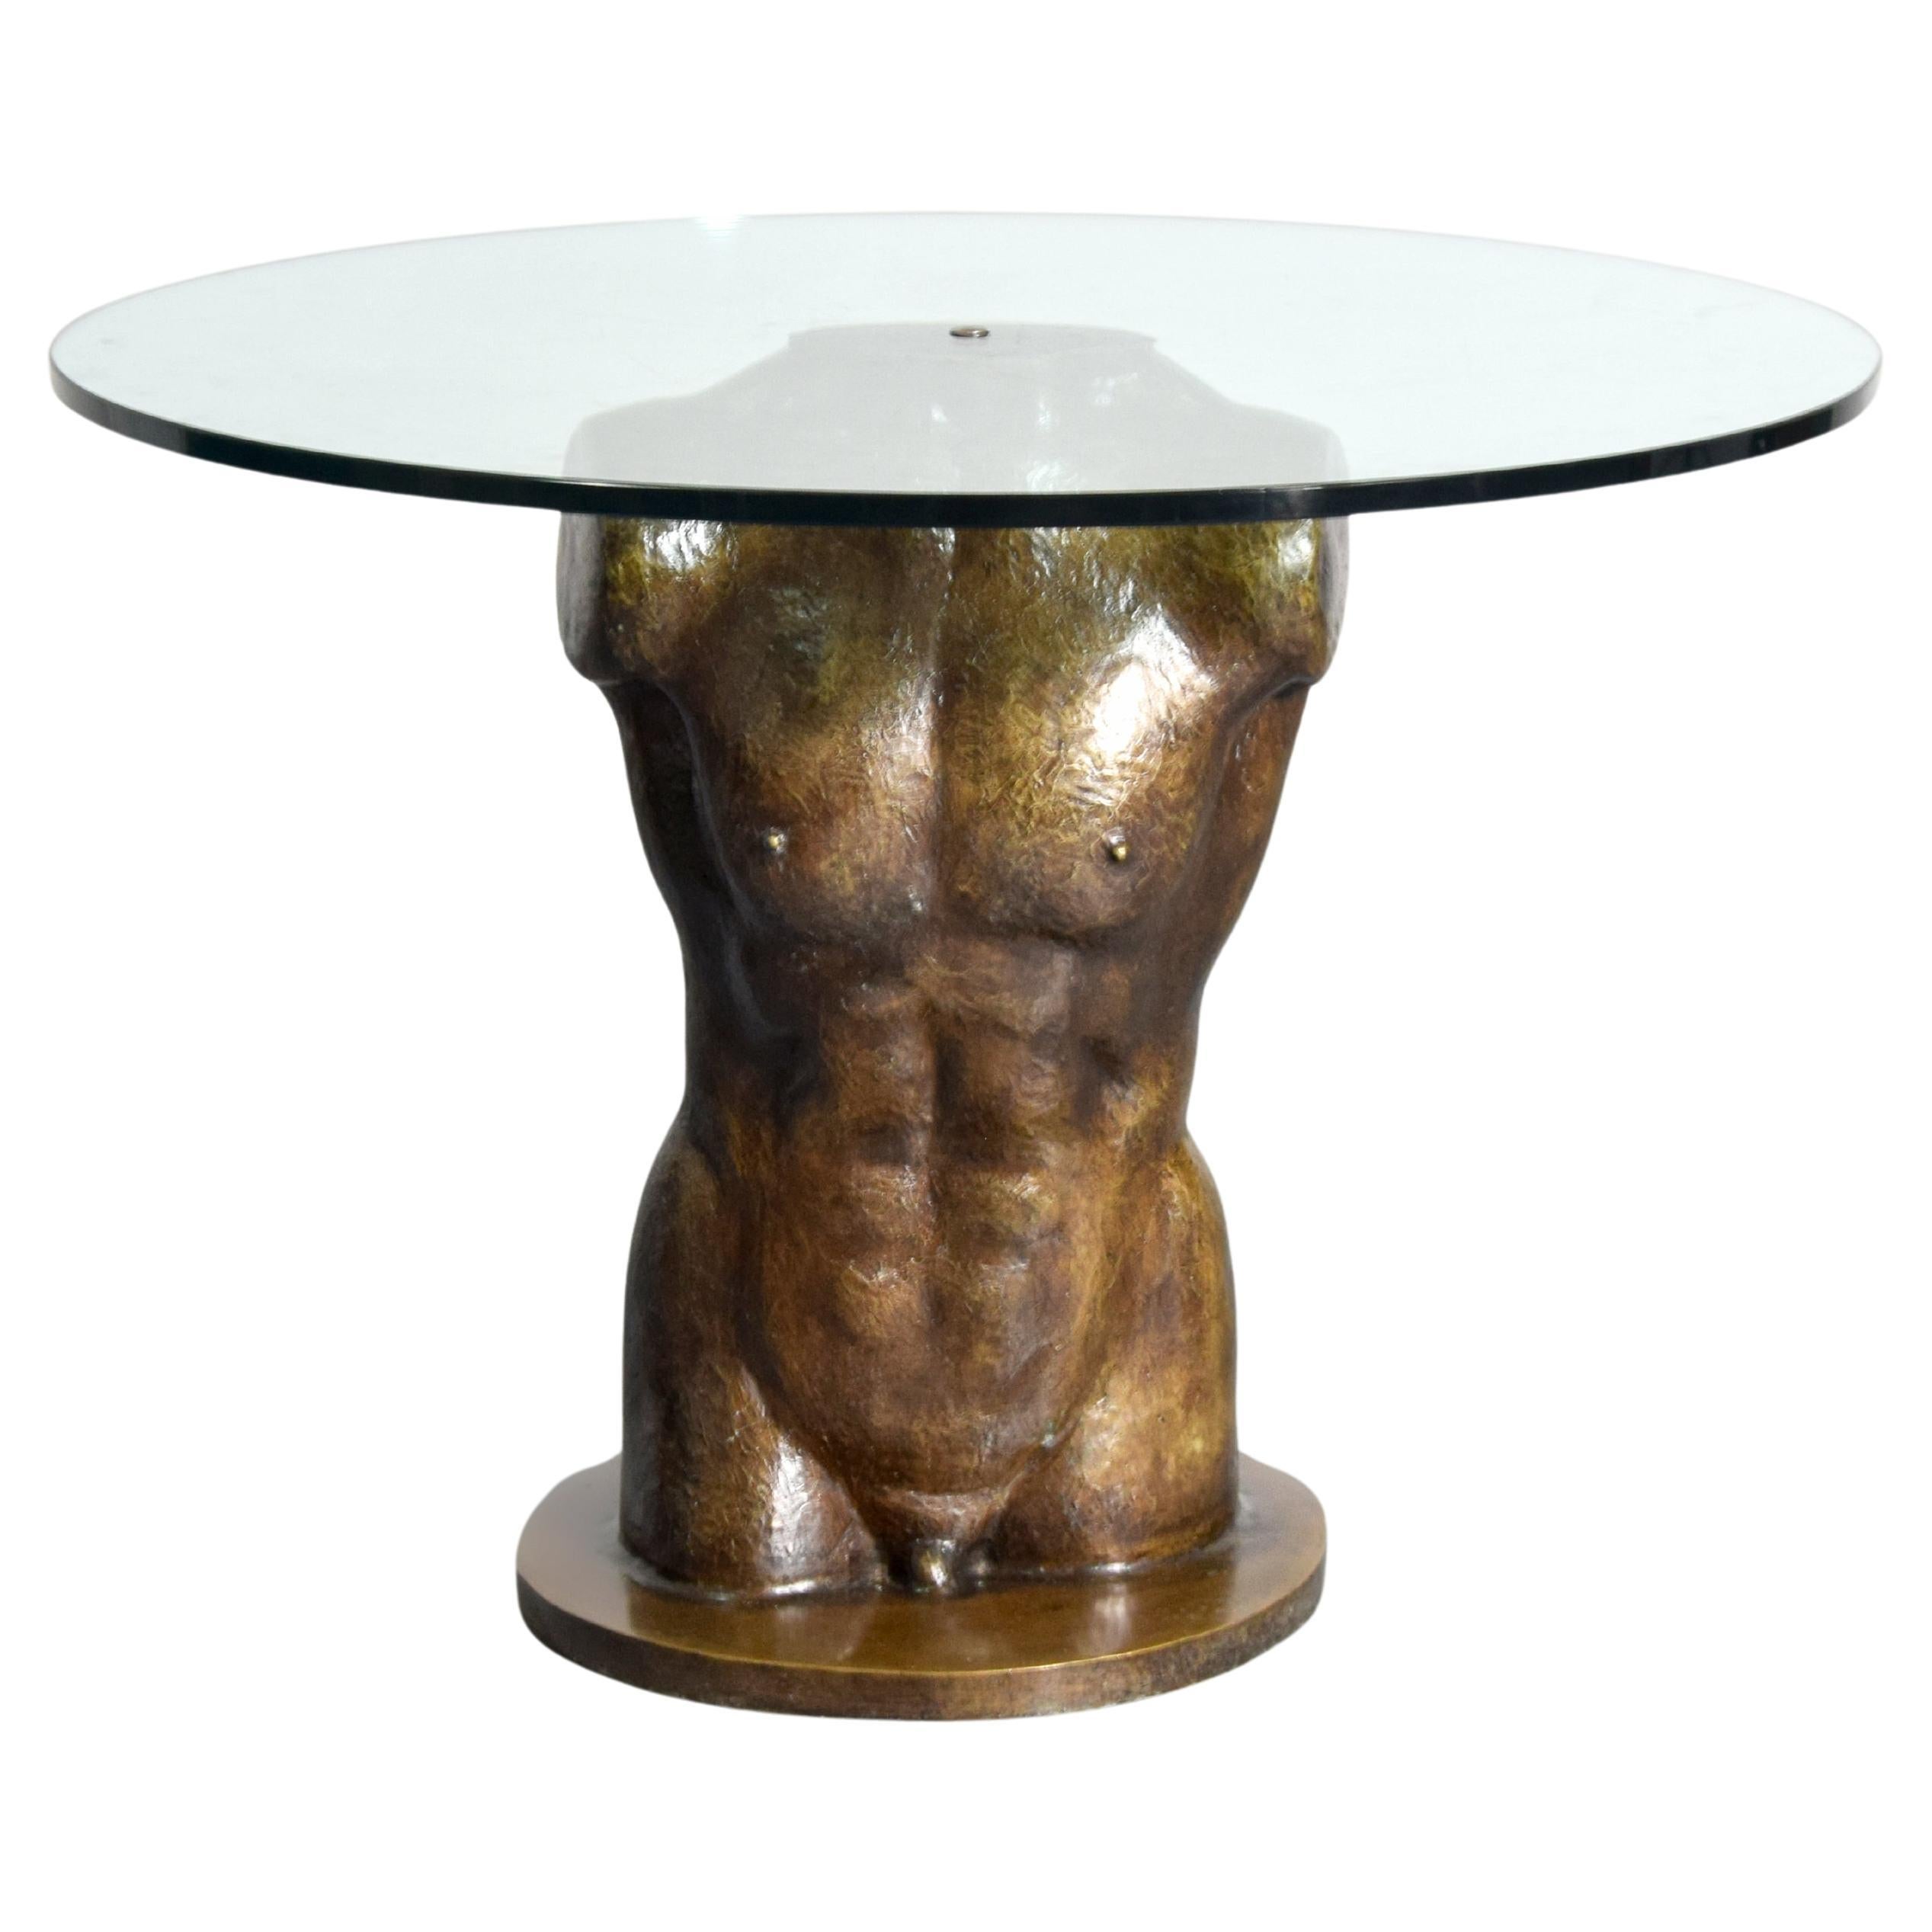 Victor Salmones “Torso” Bronze Sculptural Dining Table